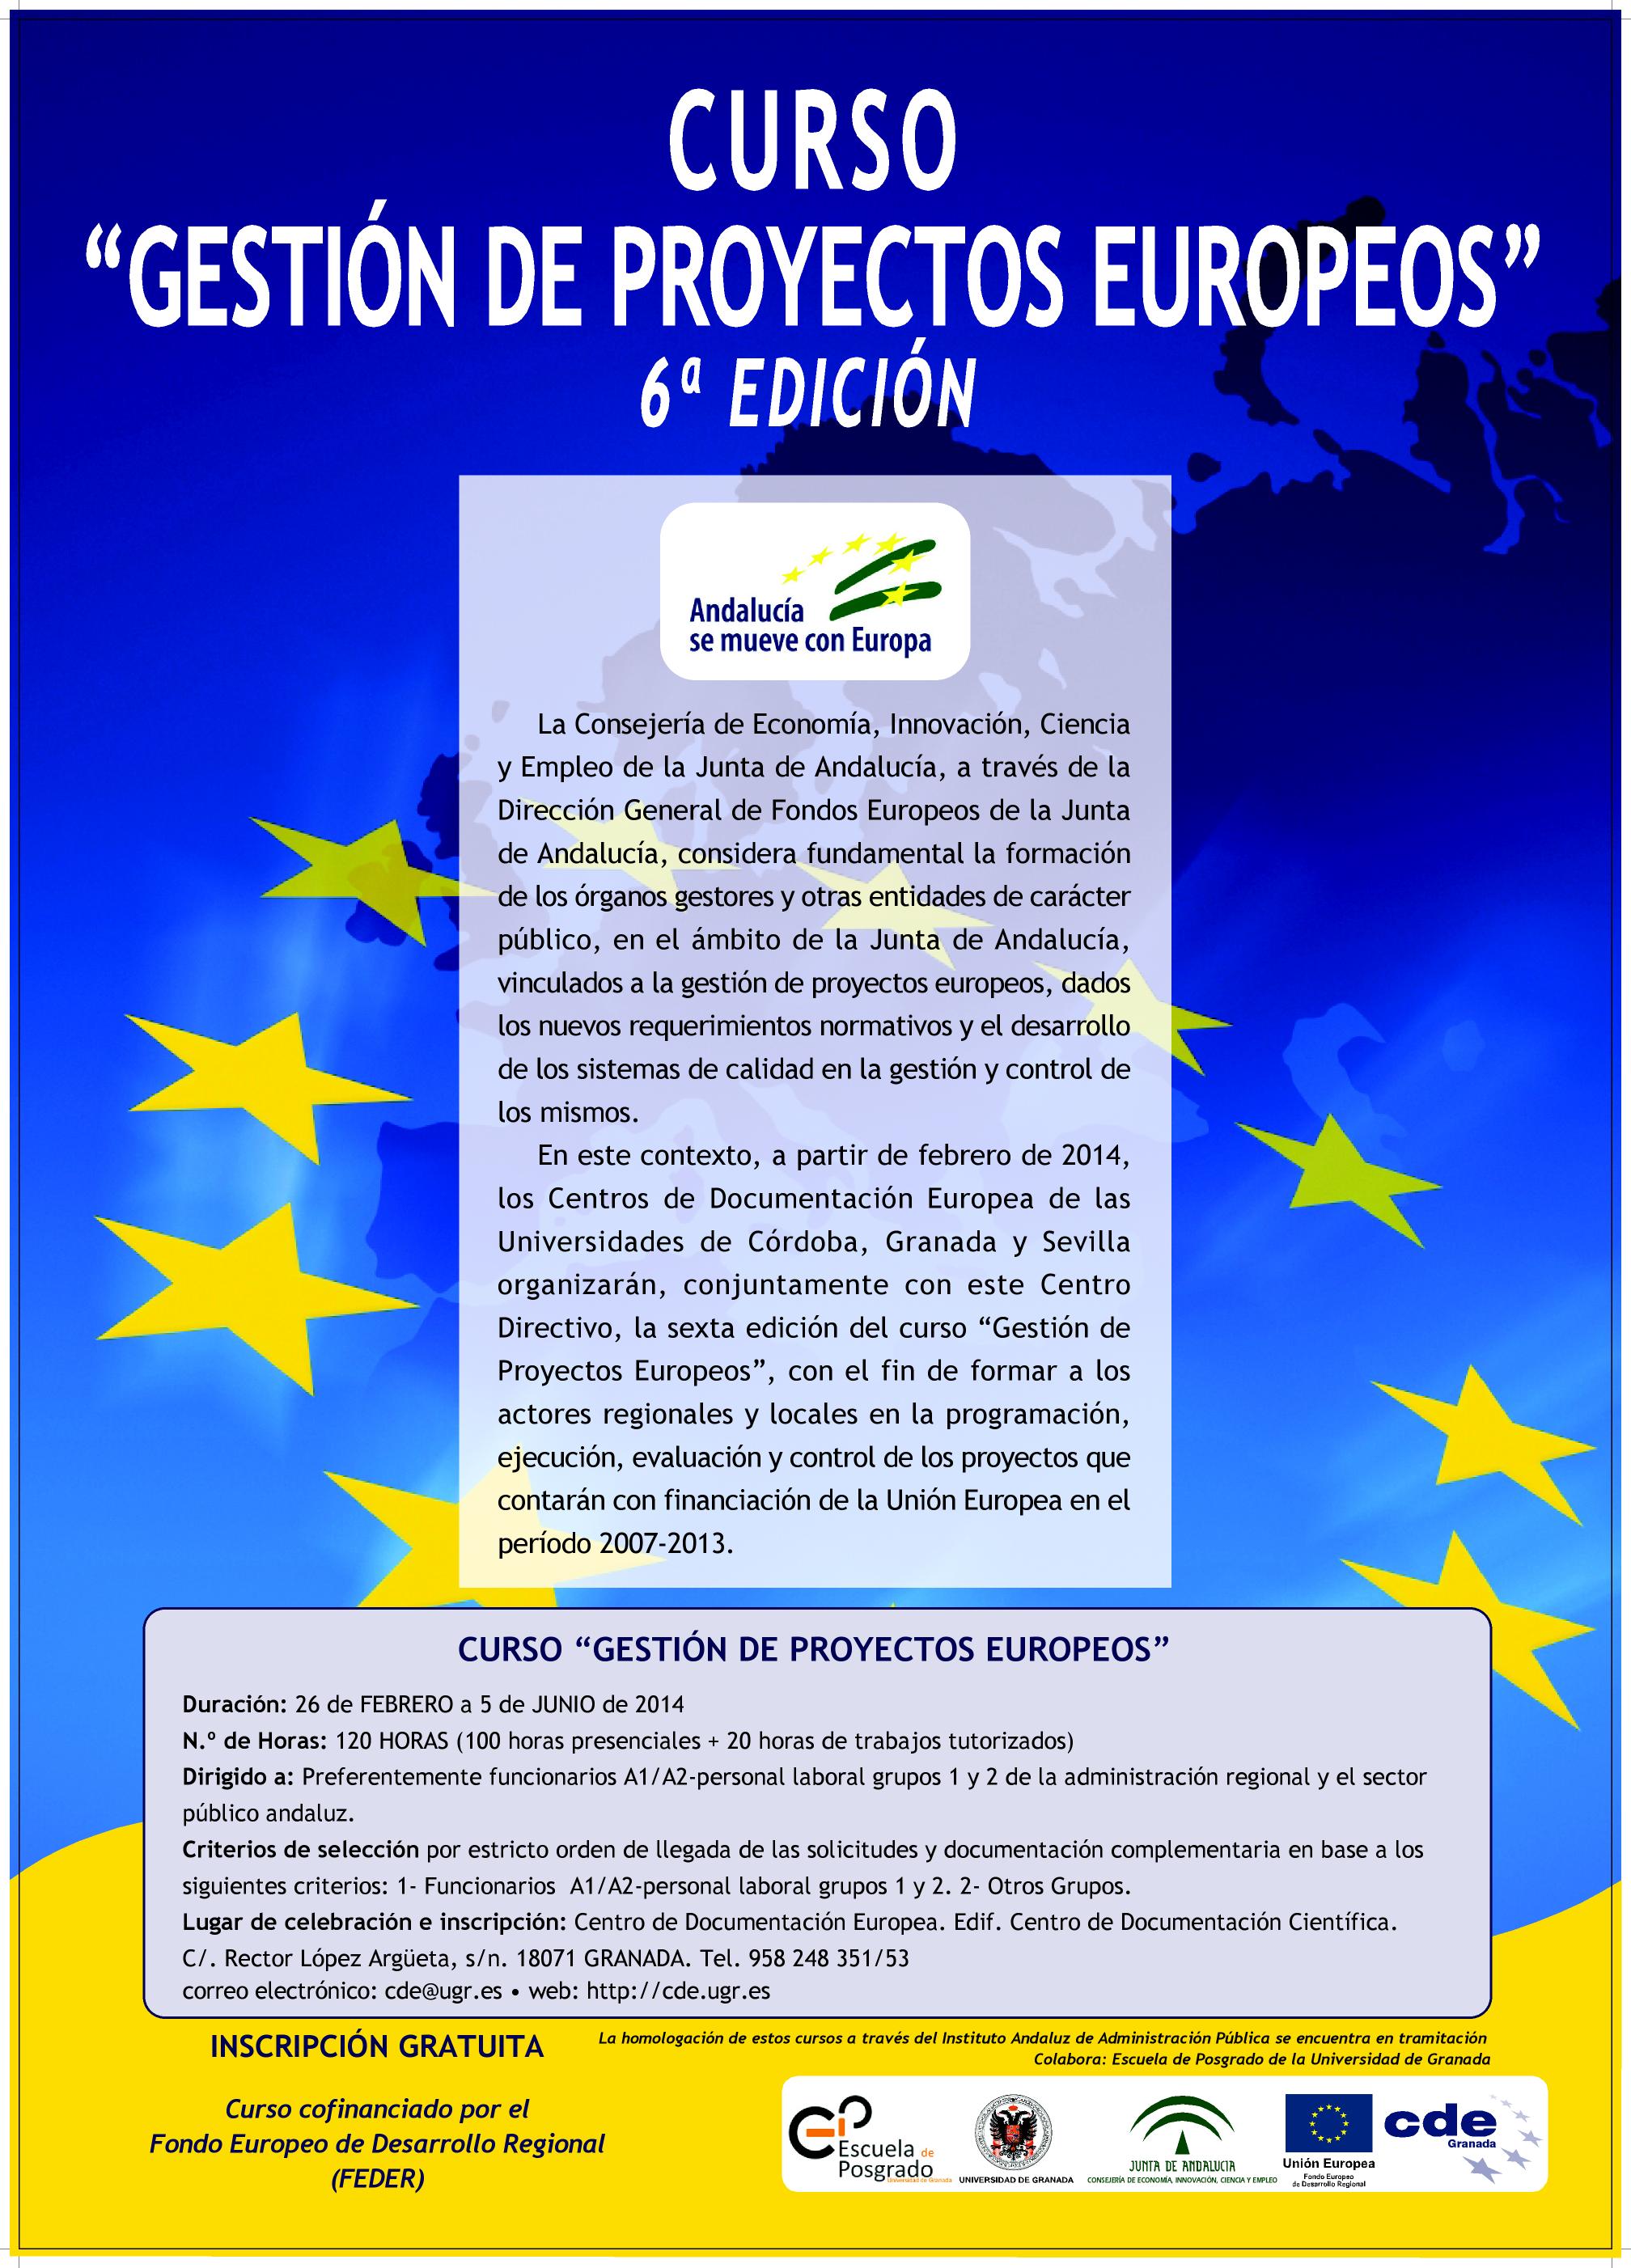 Curso "Gestión de Proyectos Europeos 6ª Edición"